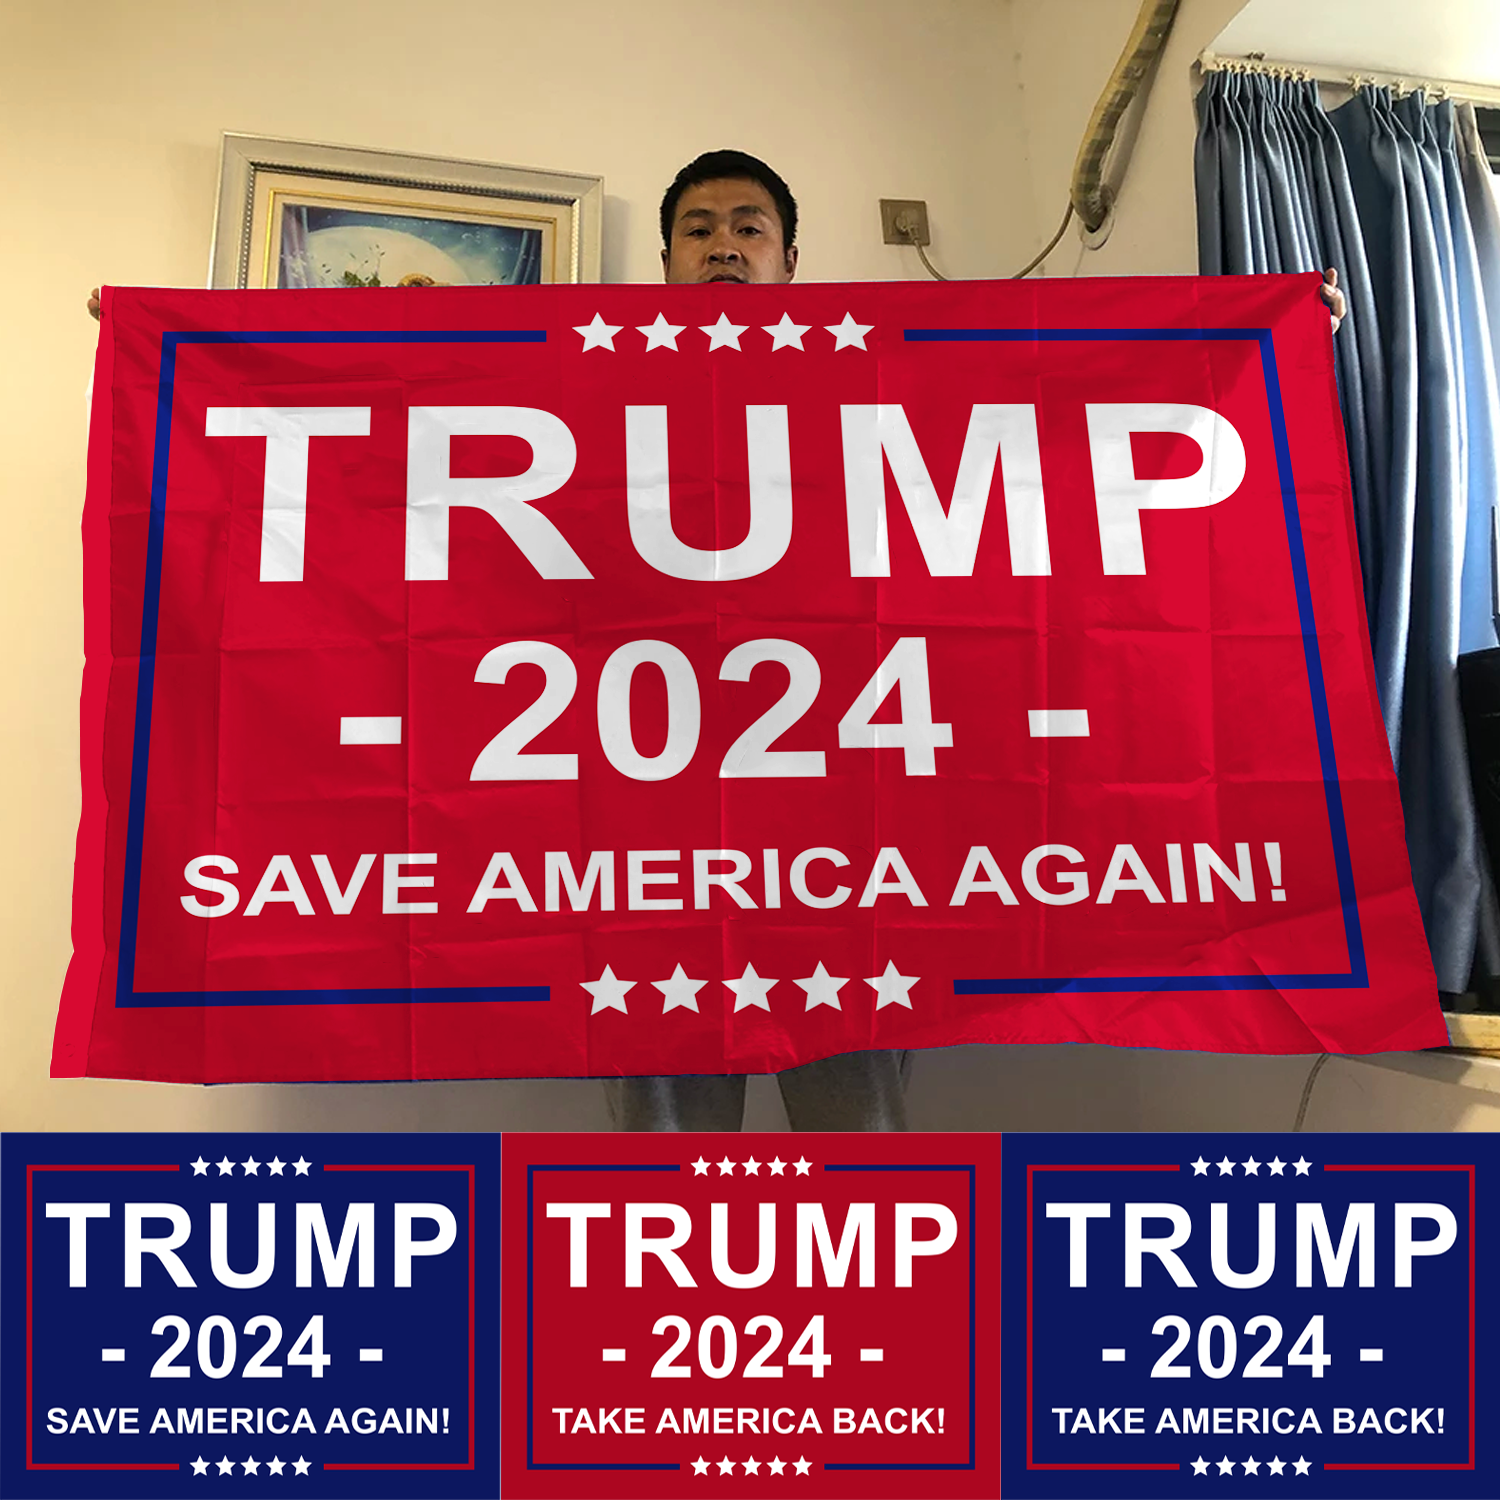 Keep America Great Trump 2024, Horizontal House Flag - GB-HF01